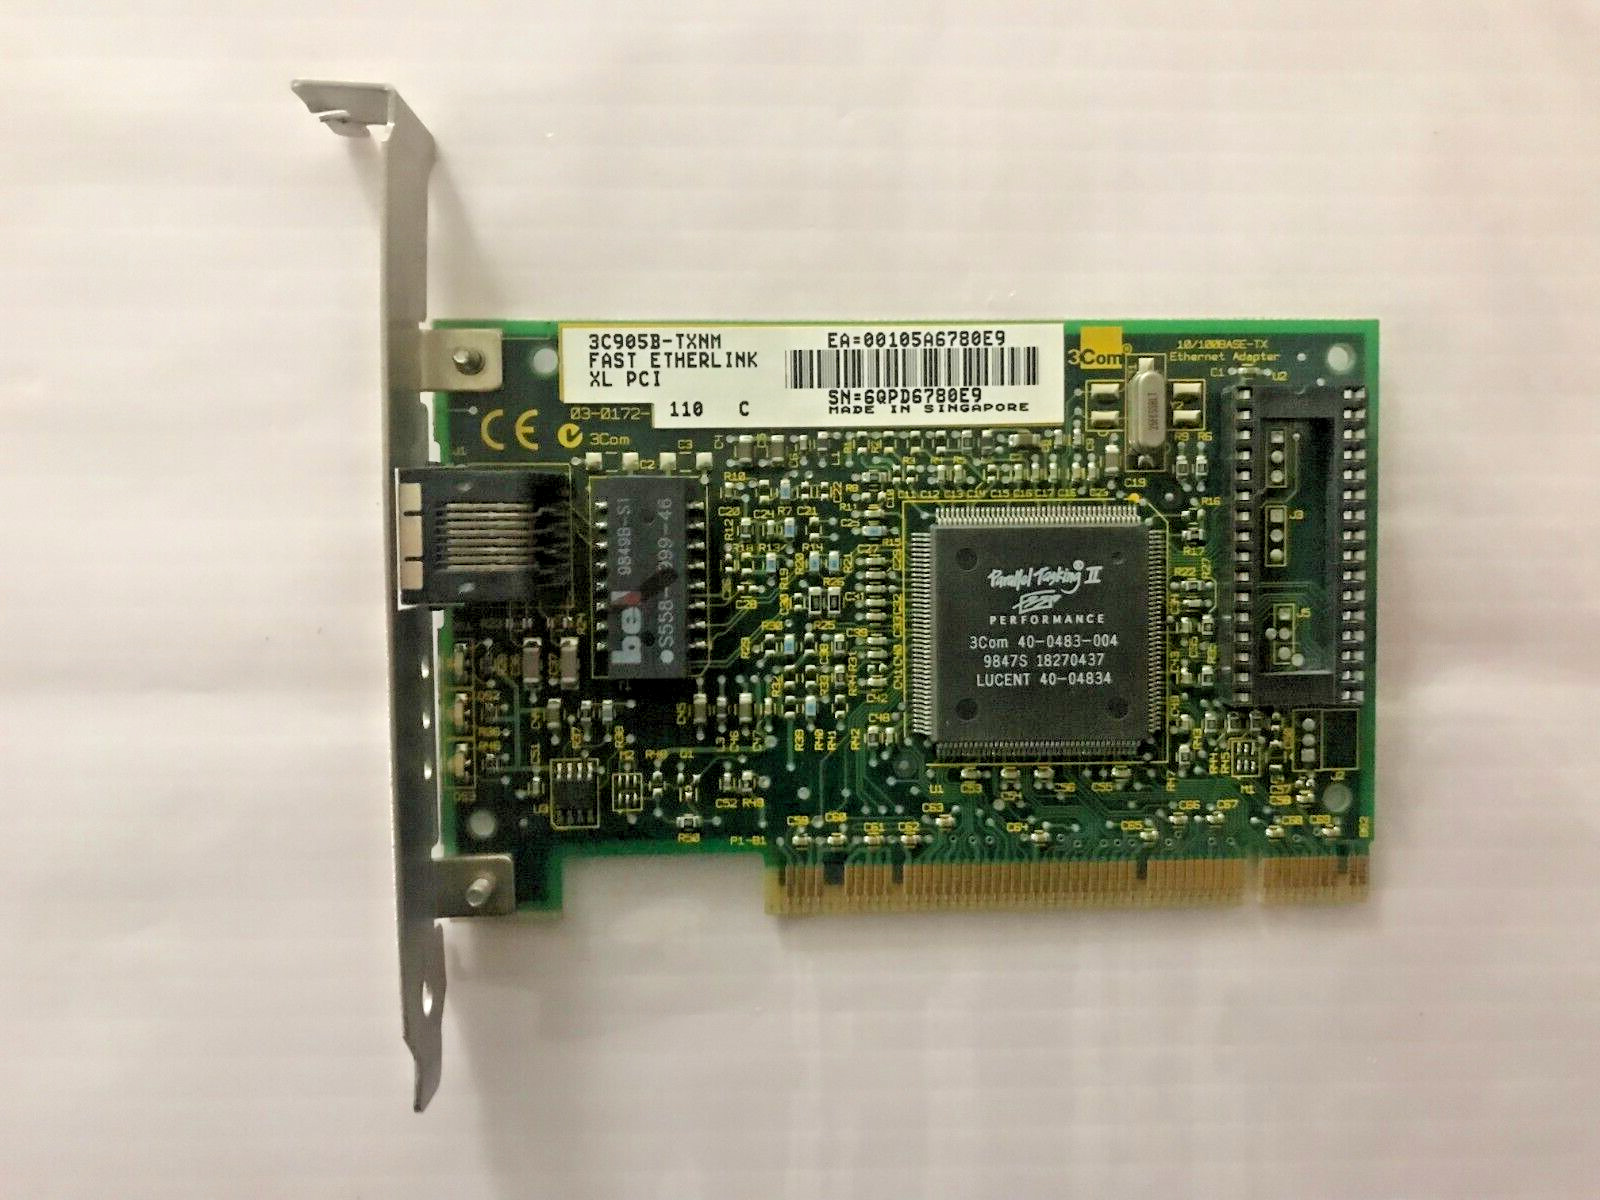 3Com 3C905B-TXNM Fast Etherlink XL PCI 10/100 Base-TX Adapter Network LAN Card